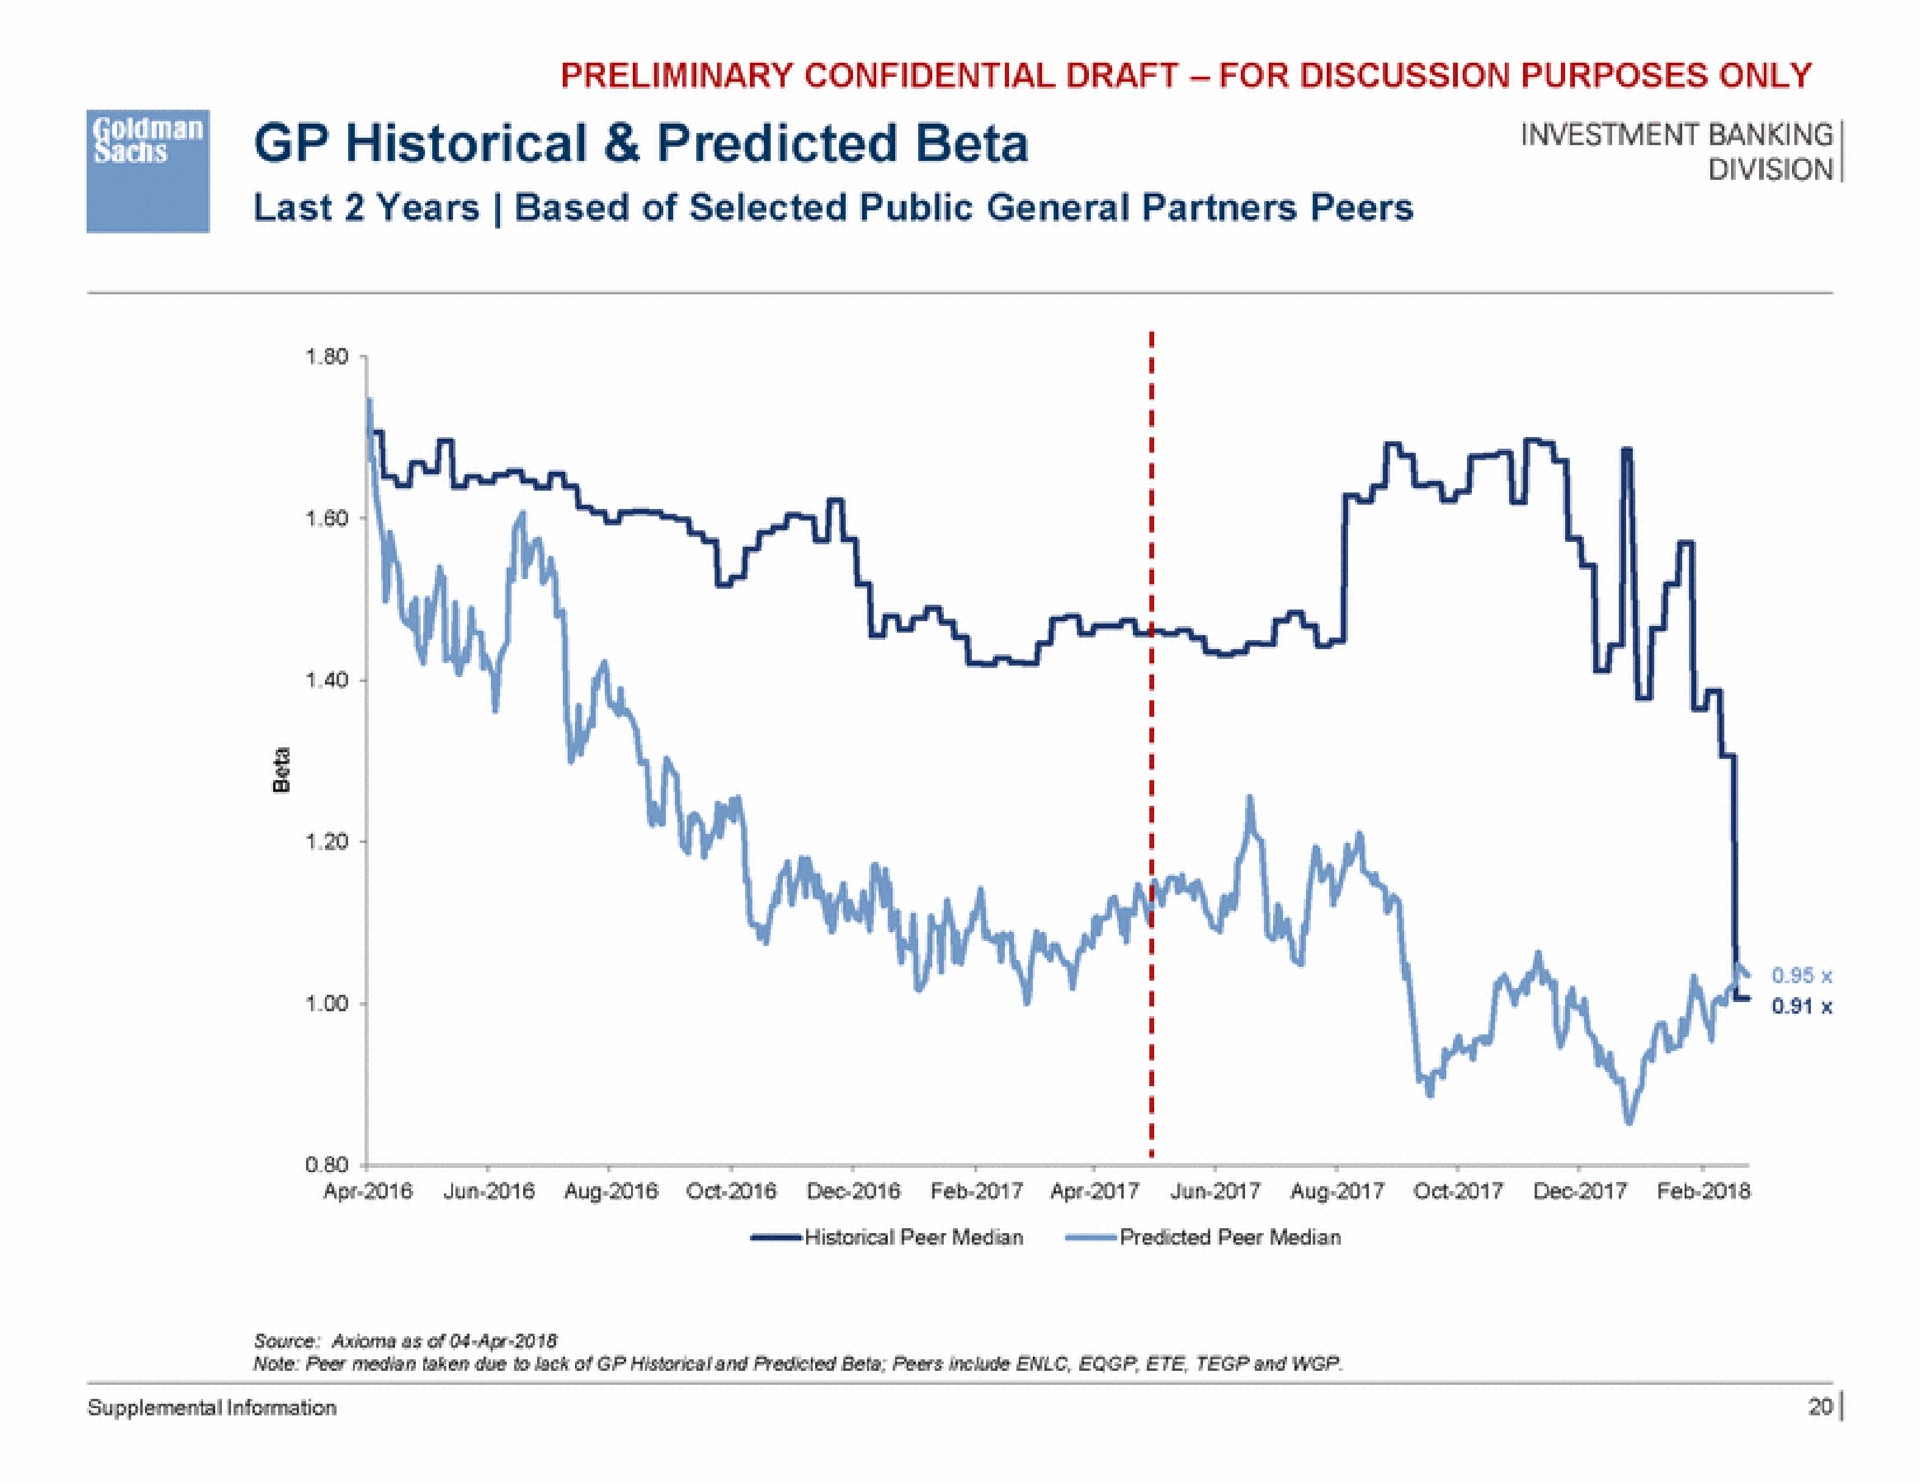 a historical predicted beta | Goldman Sachs